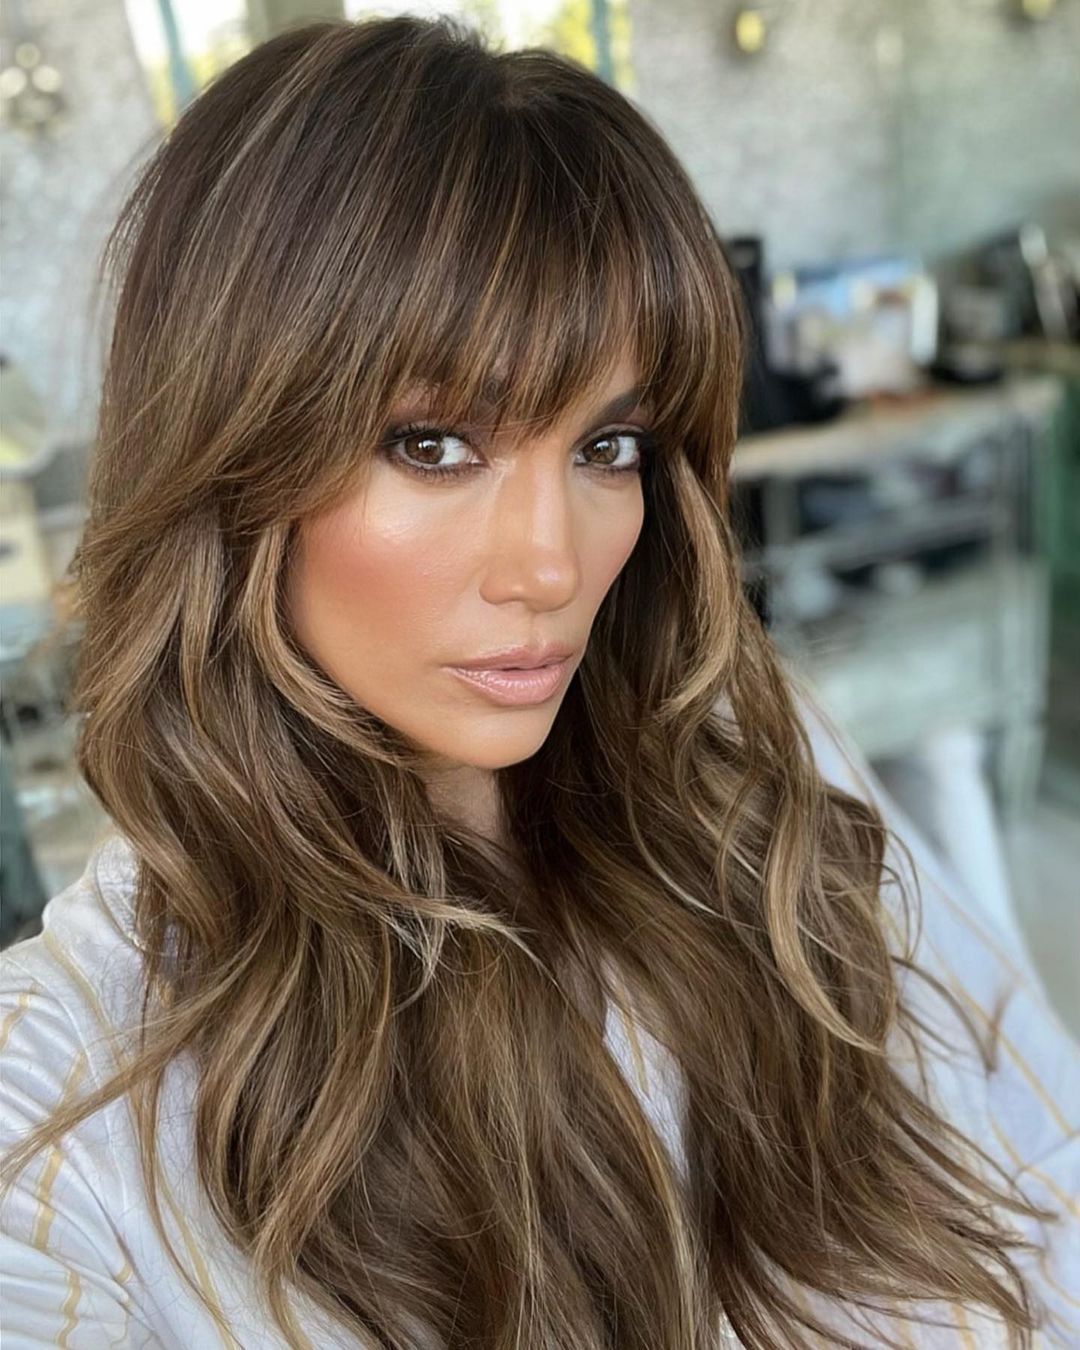 See Jennifer Lopez Debut New Bangs in Summer Hair Transformation